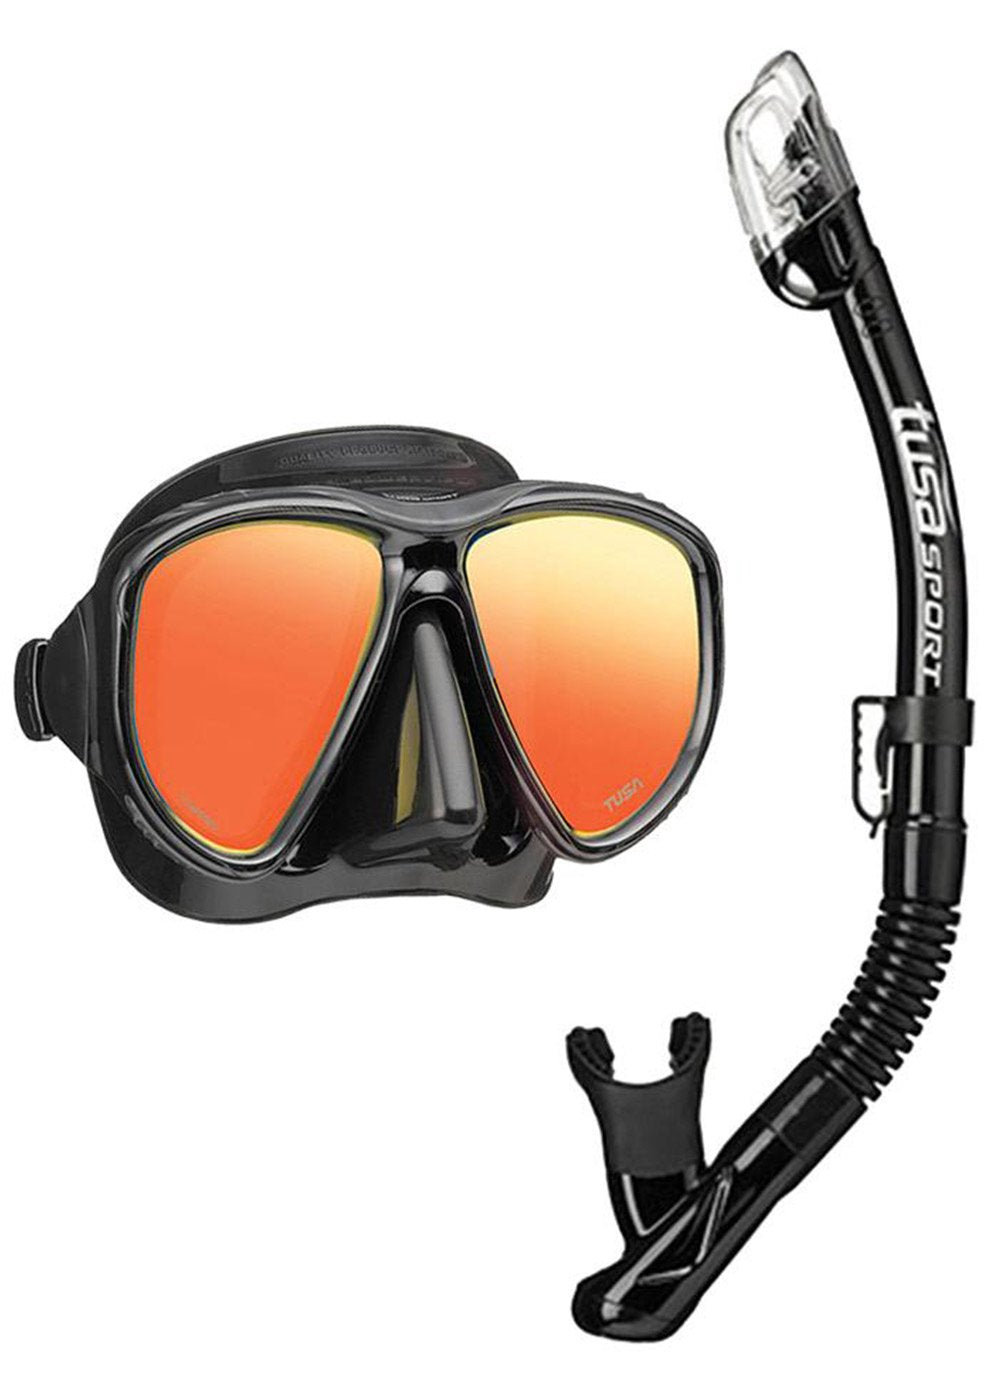 Tusa Black Series Mirror Mask Snorkel Pack with Bag - Adreno